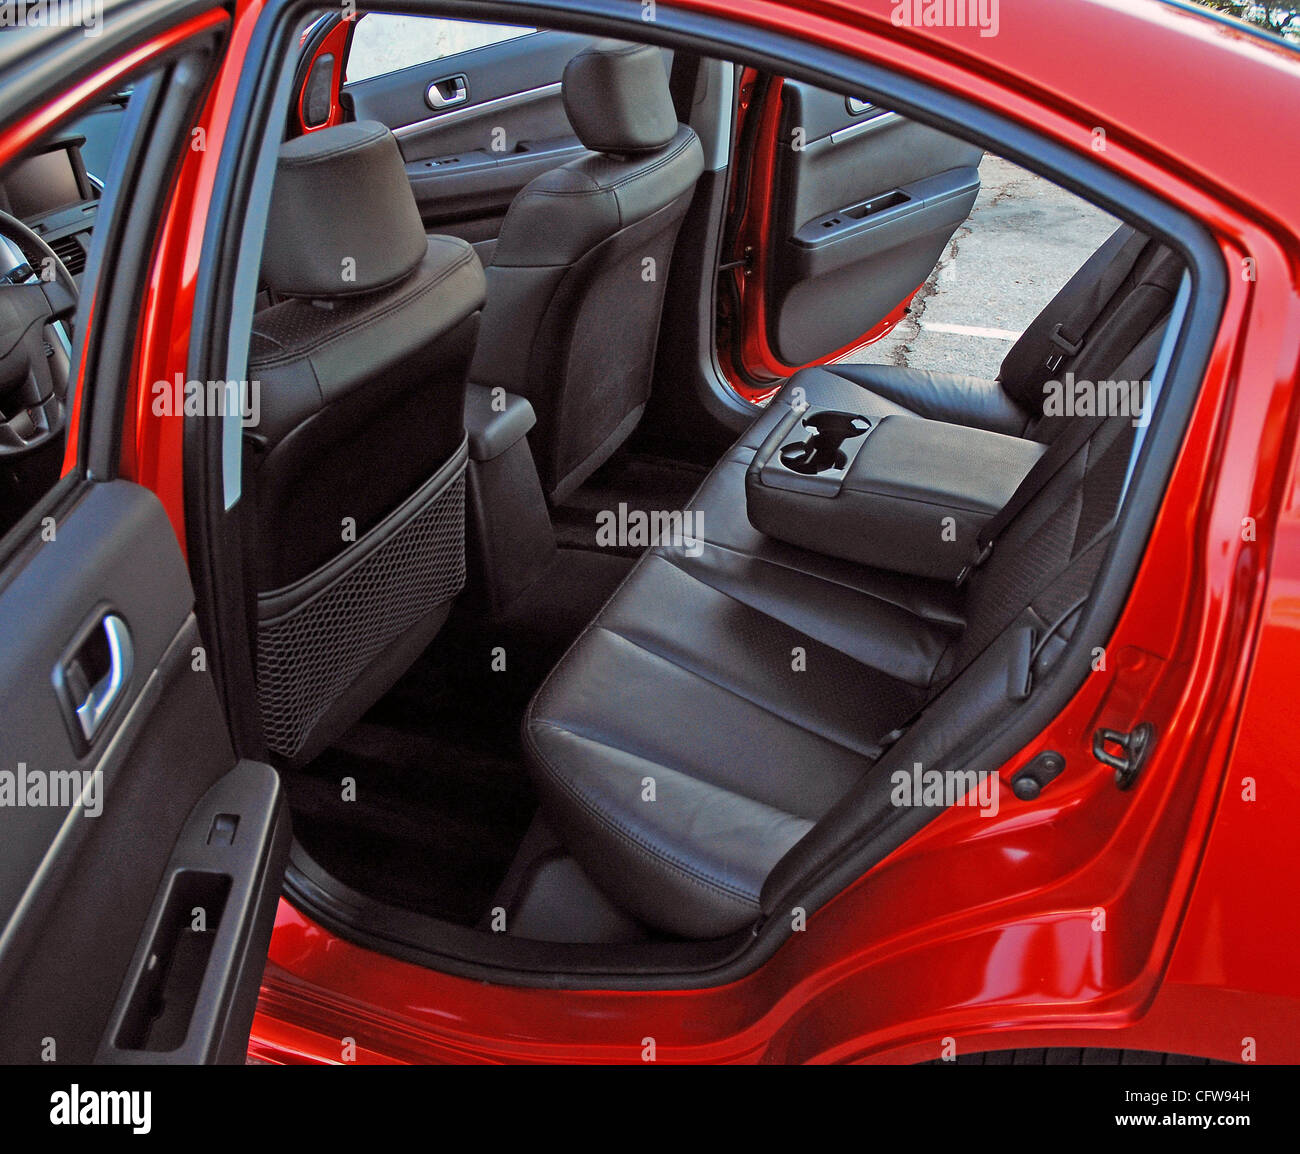 2007 Mitsubishi Galant Ralliart Rear Seats Stock Photo